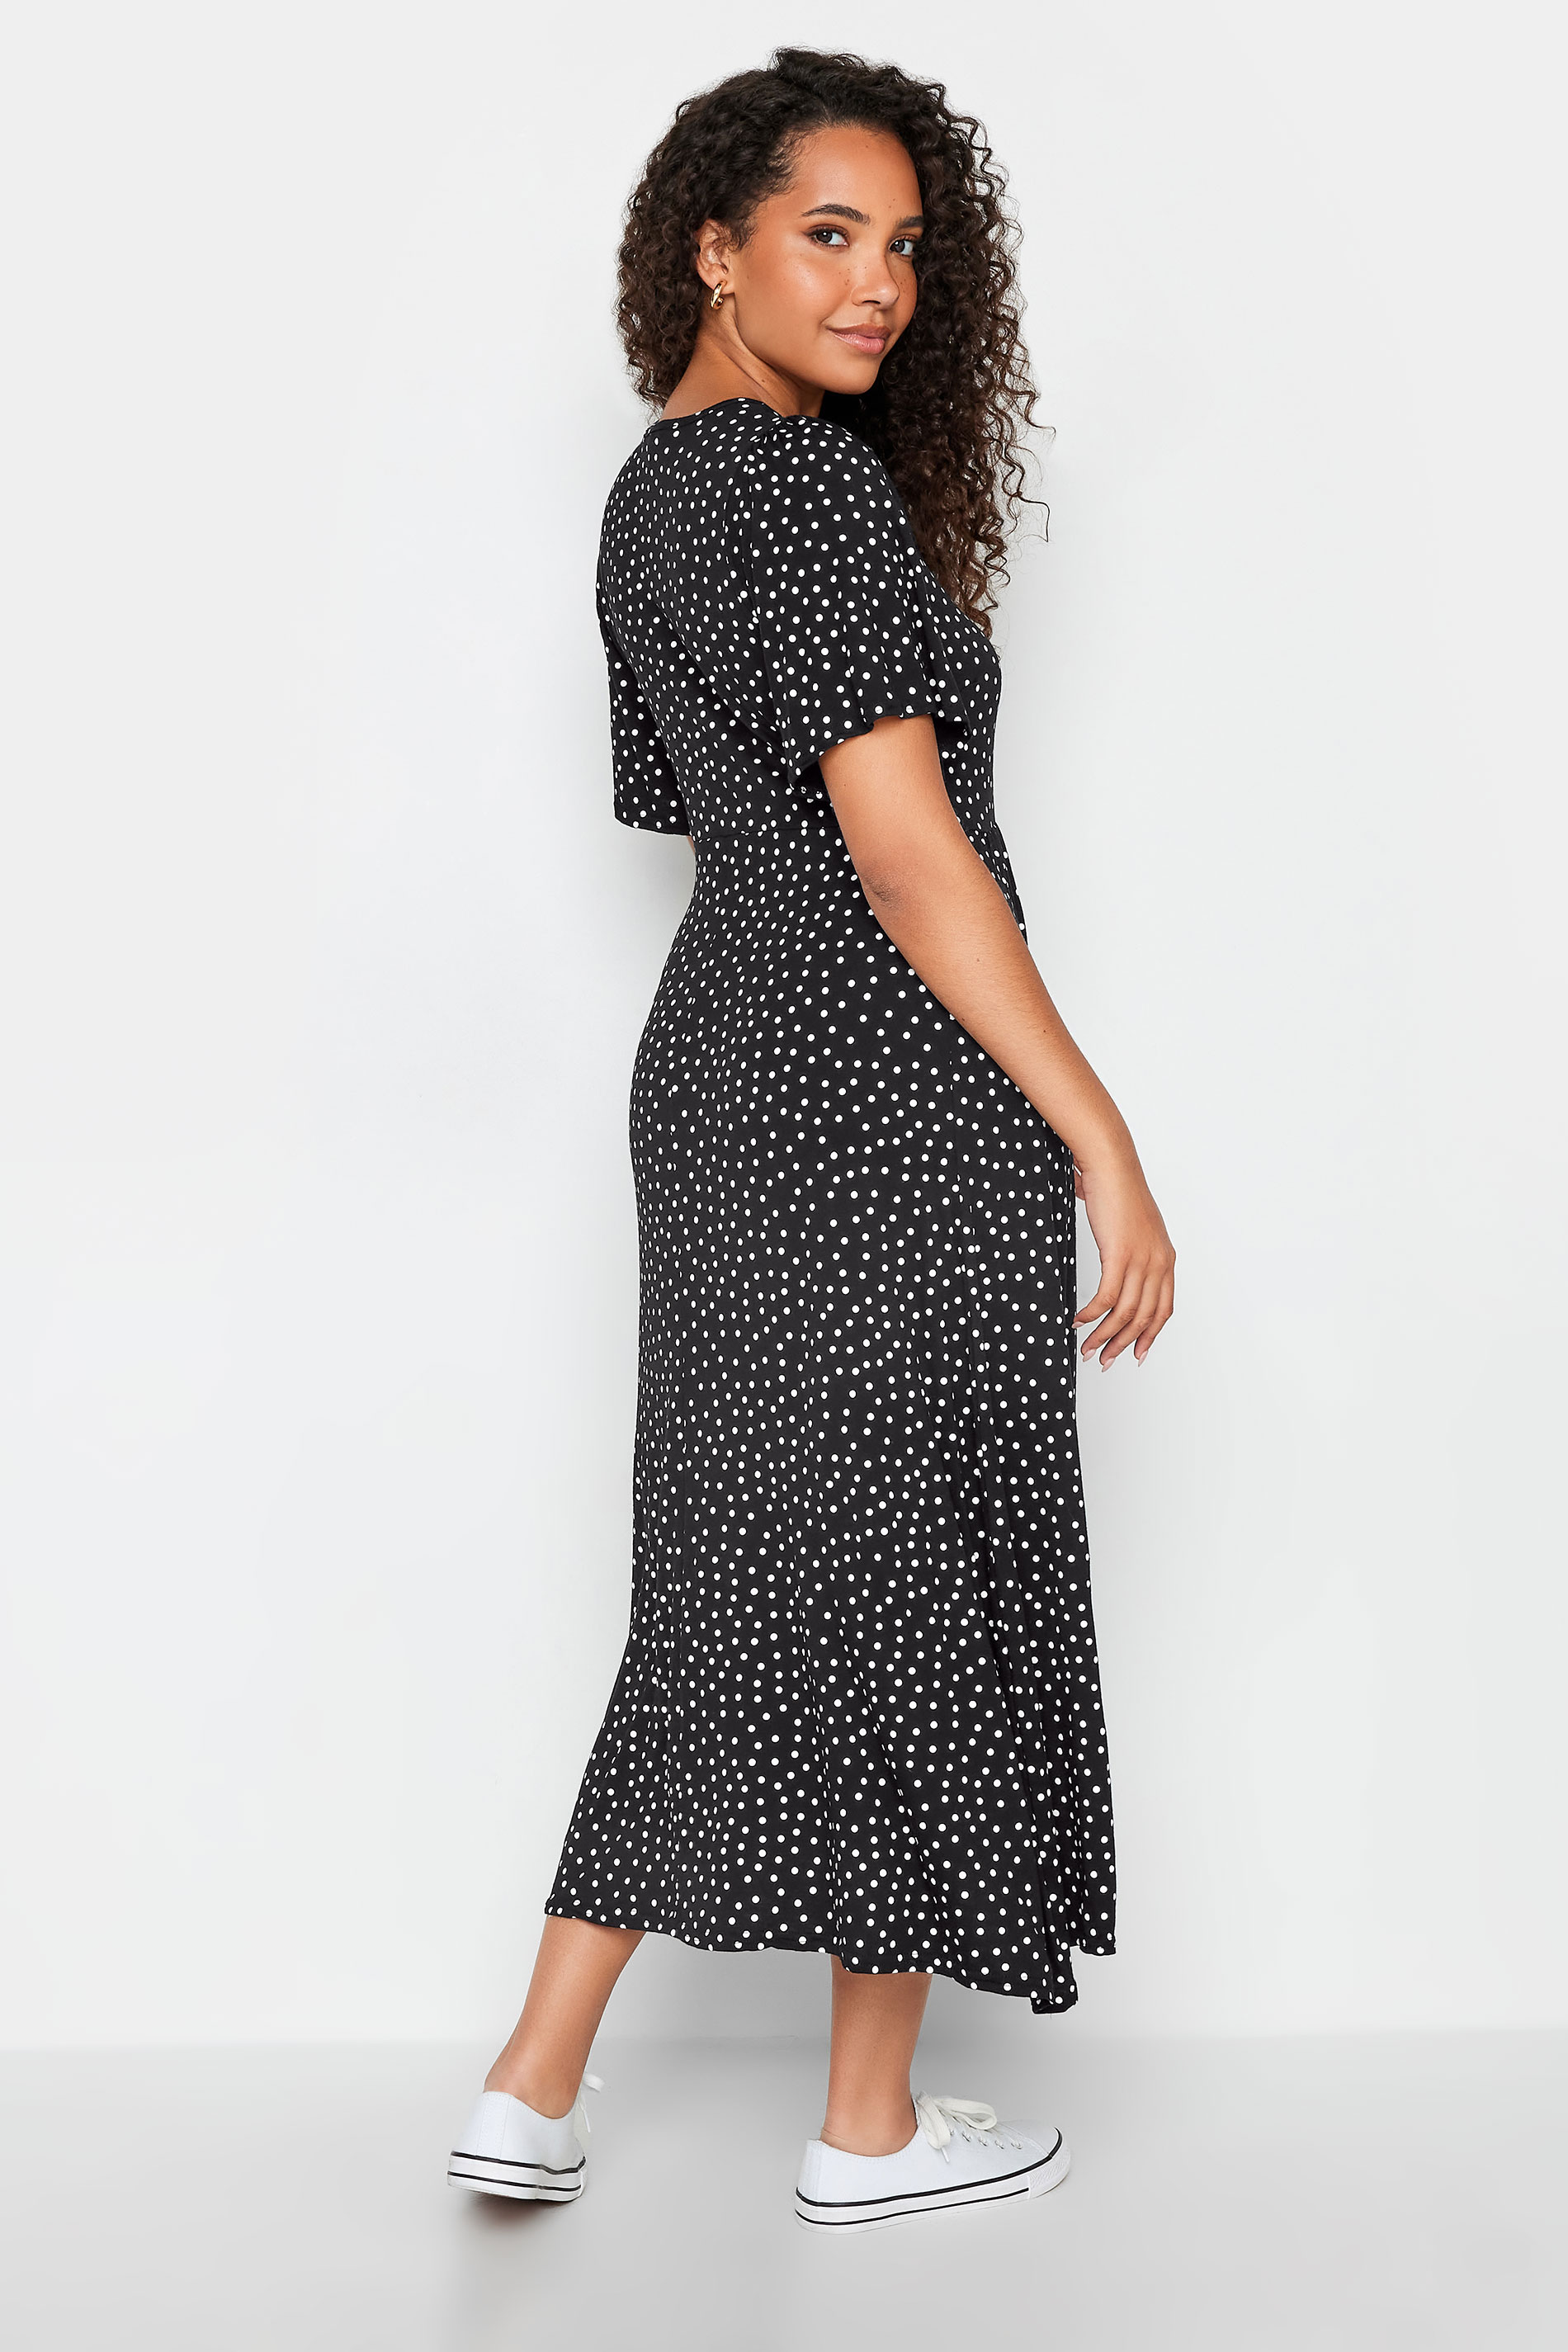 M&Co Black Polka Dot Maxi Dress | M&Co 3